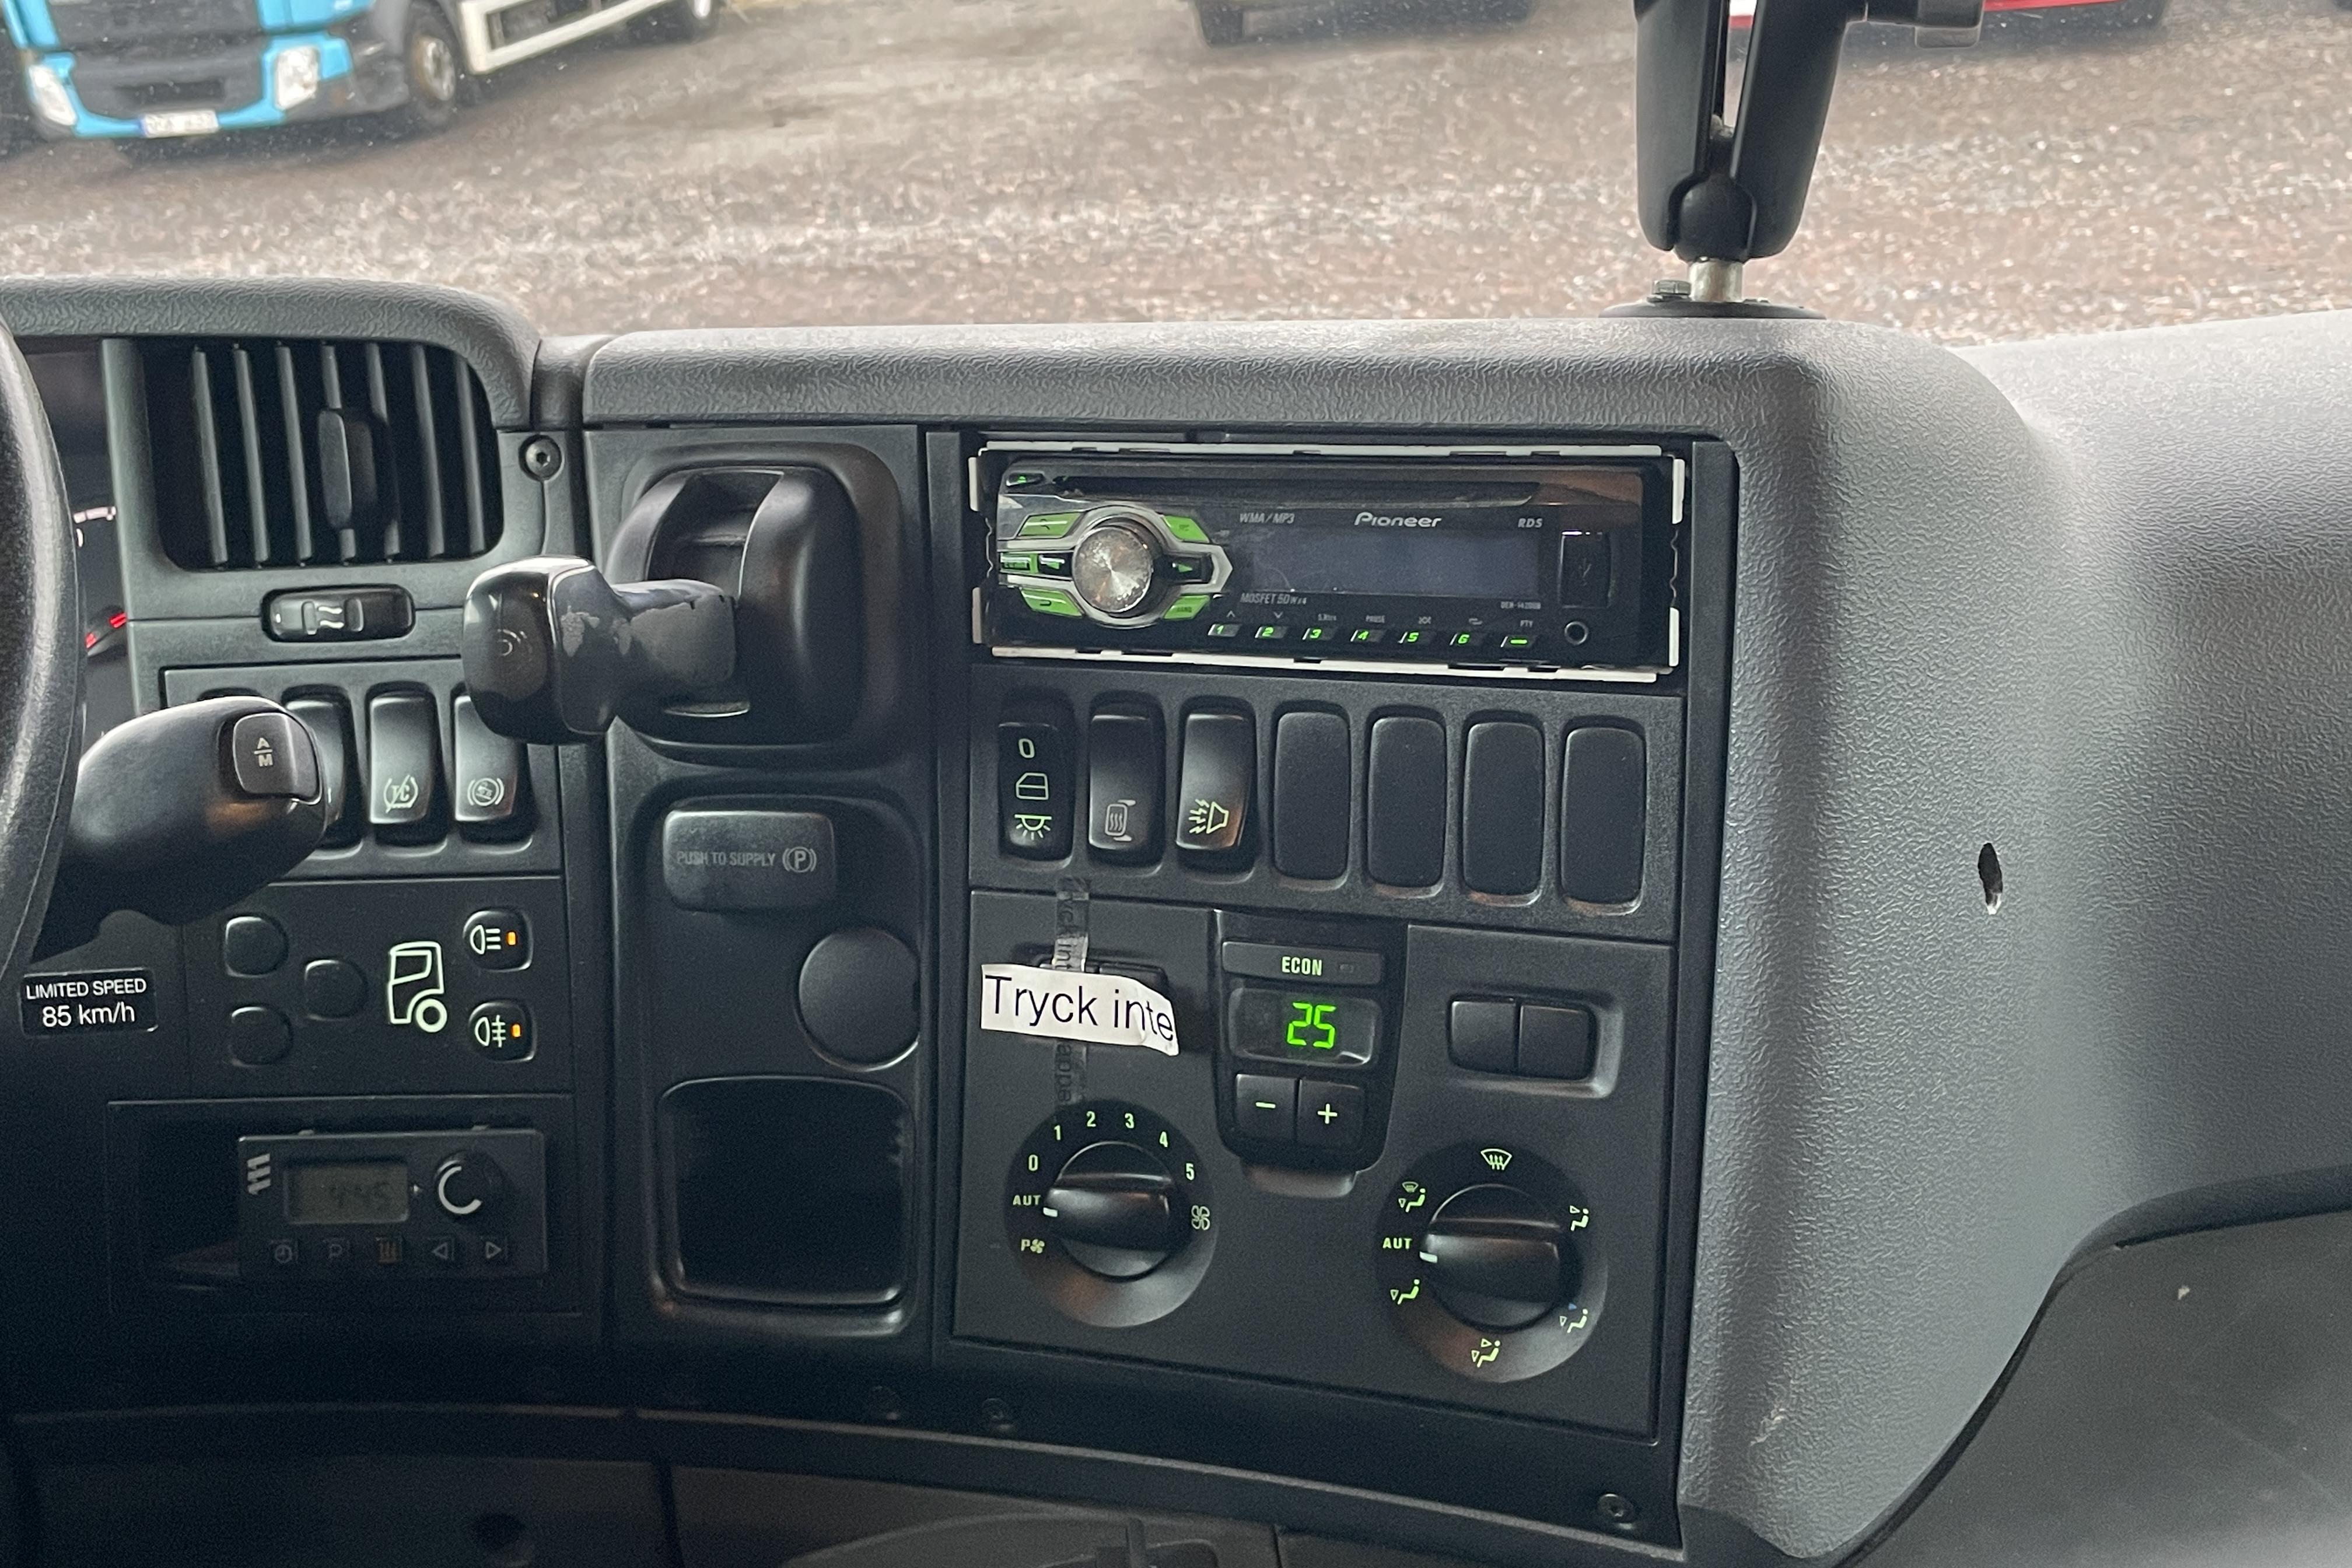 Scania P230 - 661 640 km - Automatic - blue - 2013